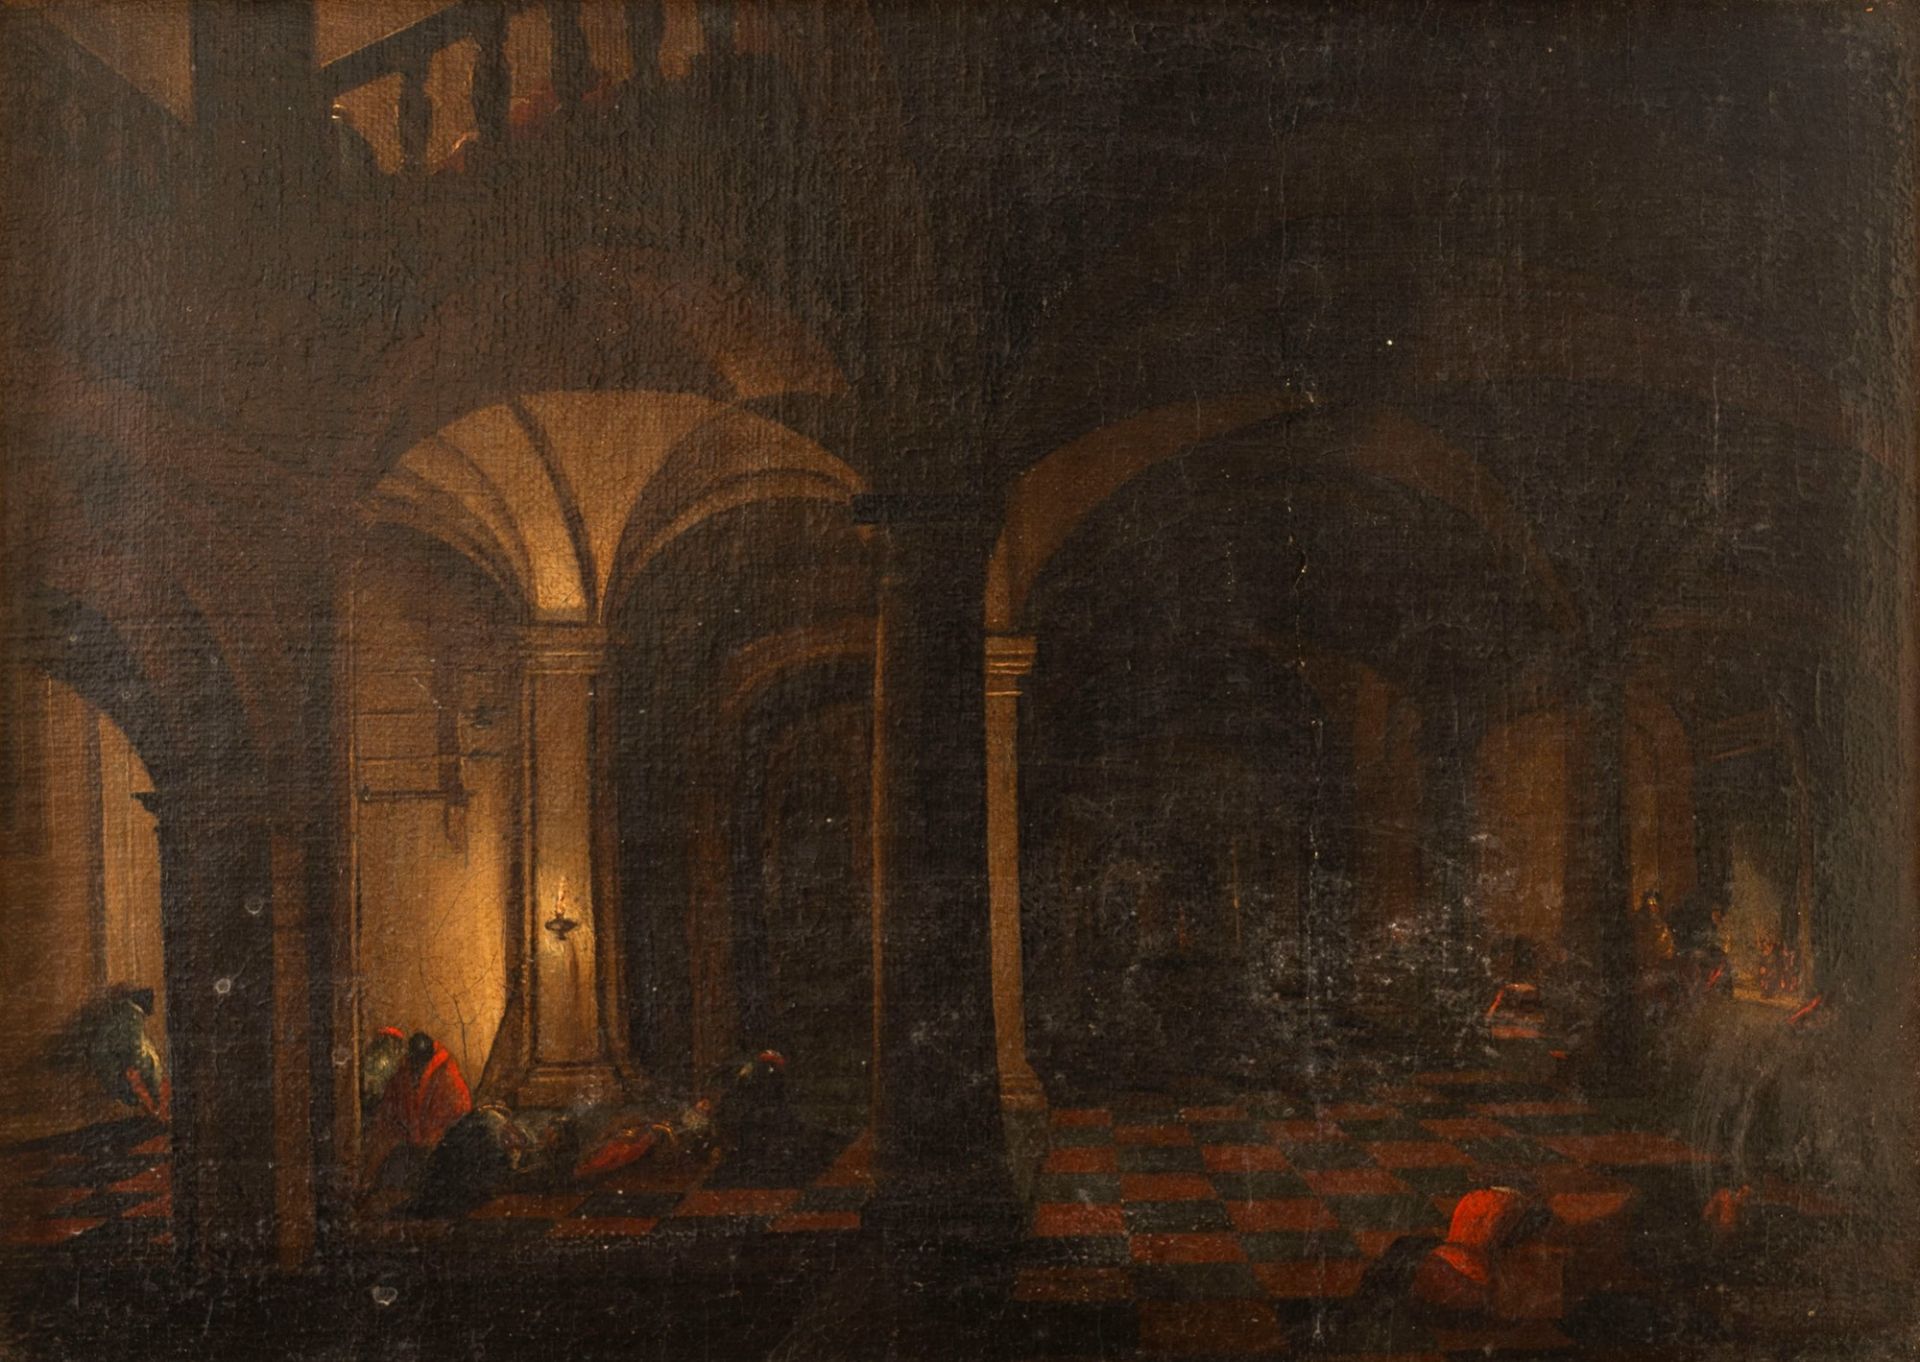 Flemish School, XVII century - Interior scene by candlelight with figures